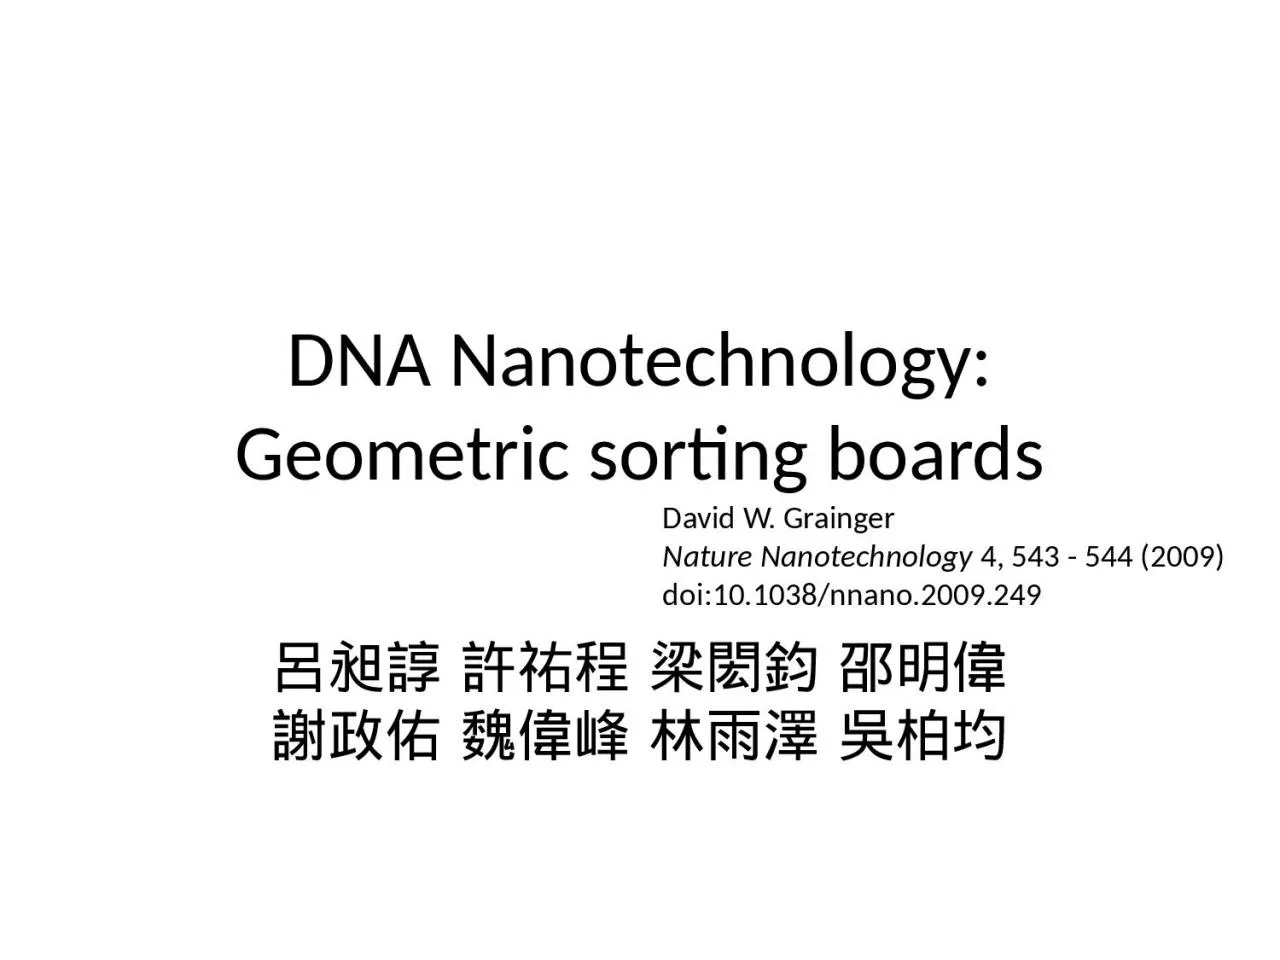 DNA Nanotechnology: Geometric sorting boards